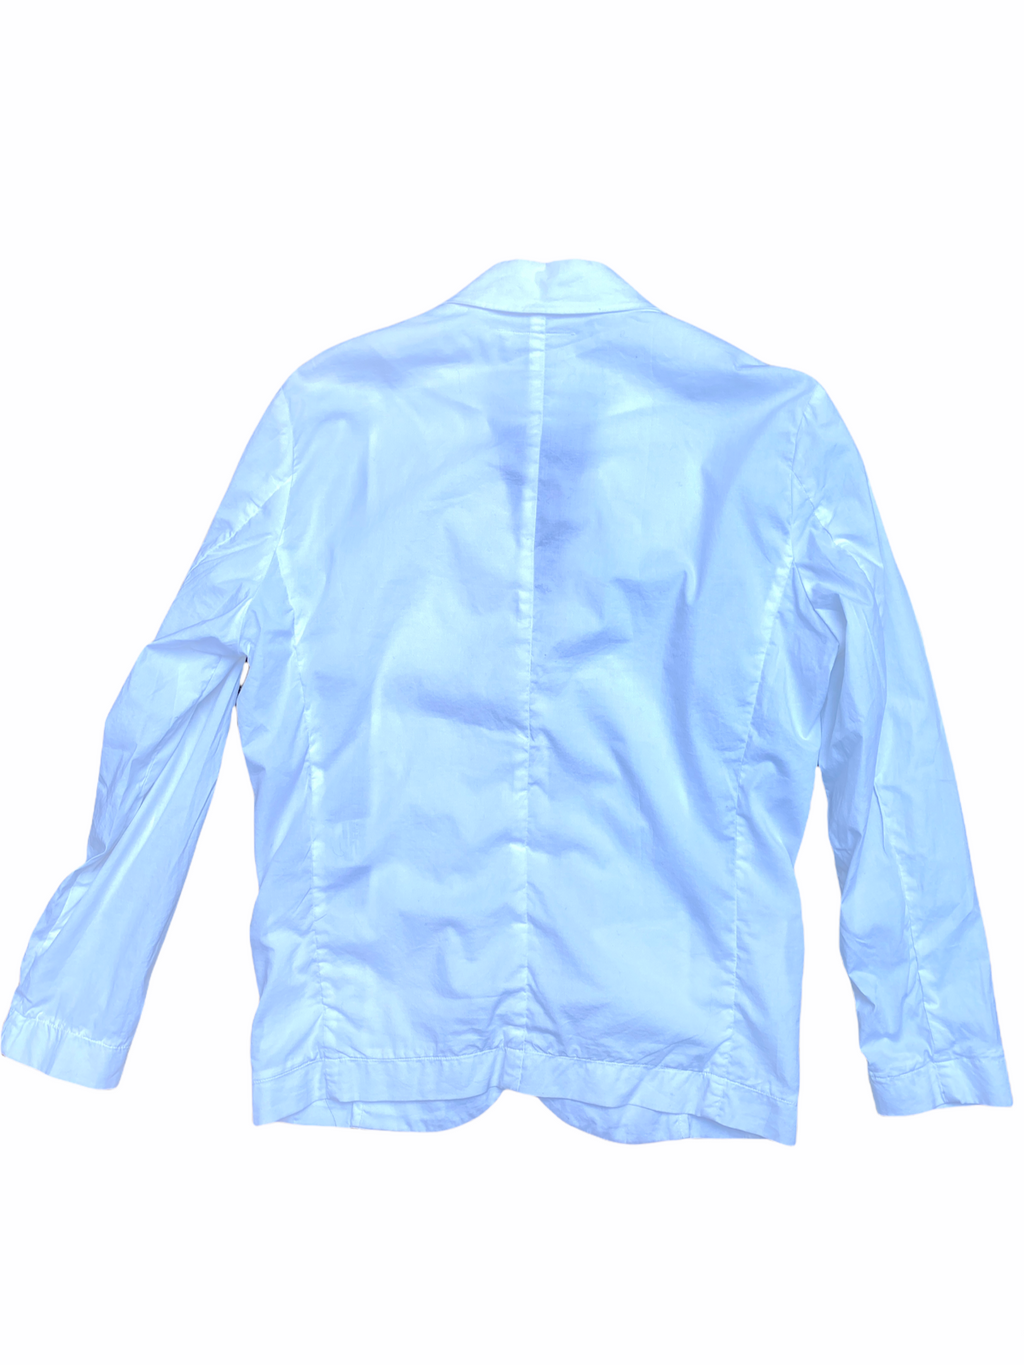 MM6 White Blazer Jacket  Size 36 S